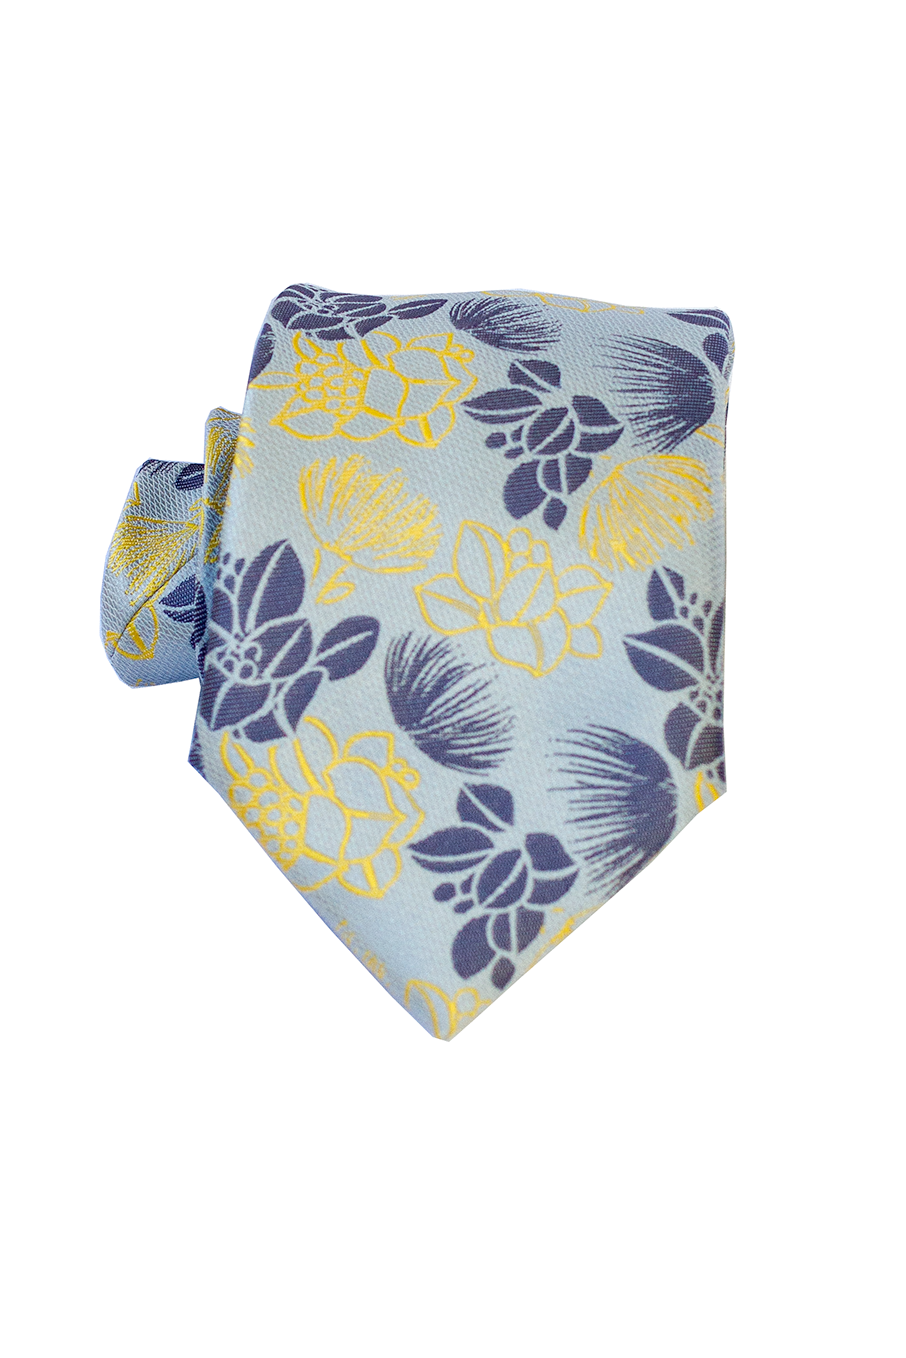 Ohia Denim/Yellow Modern Necktie